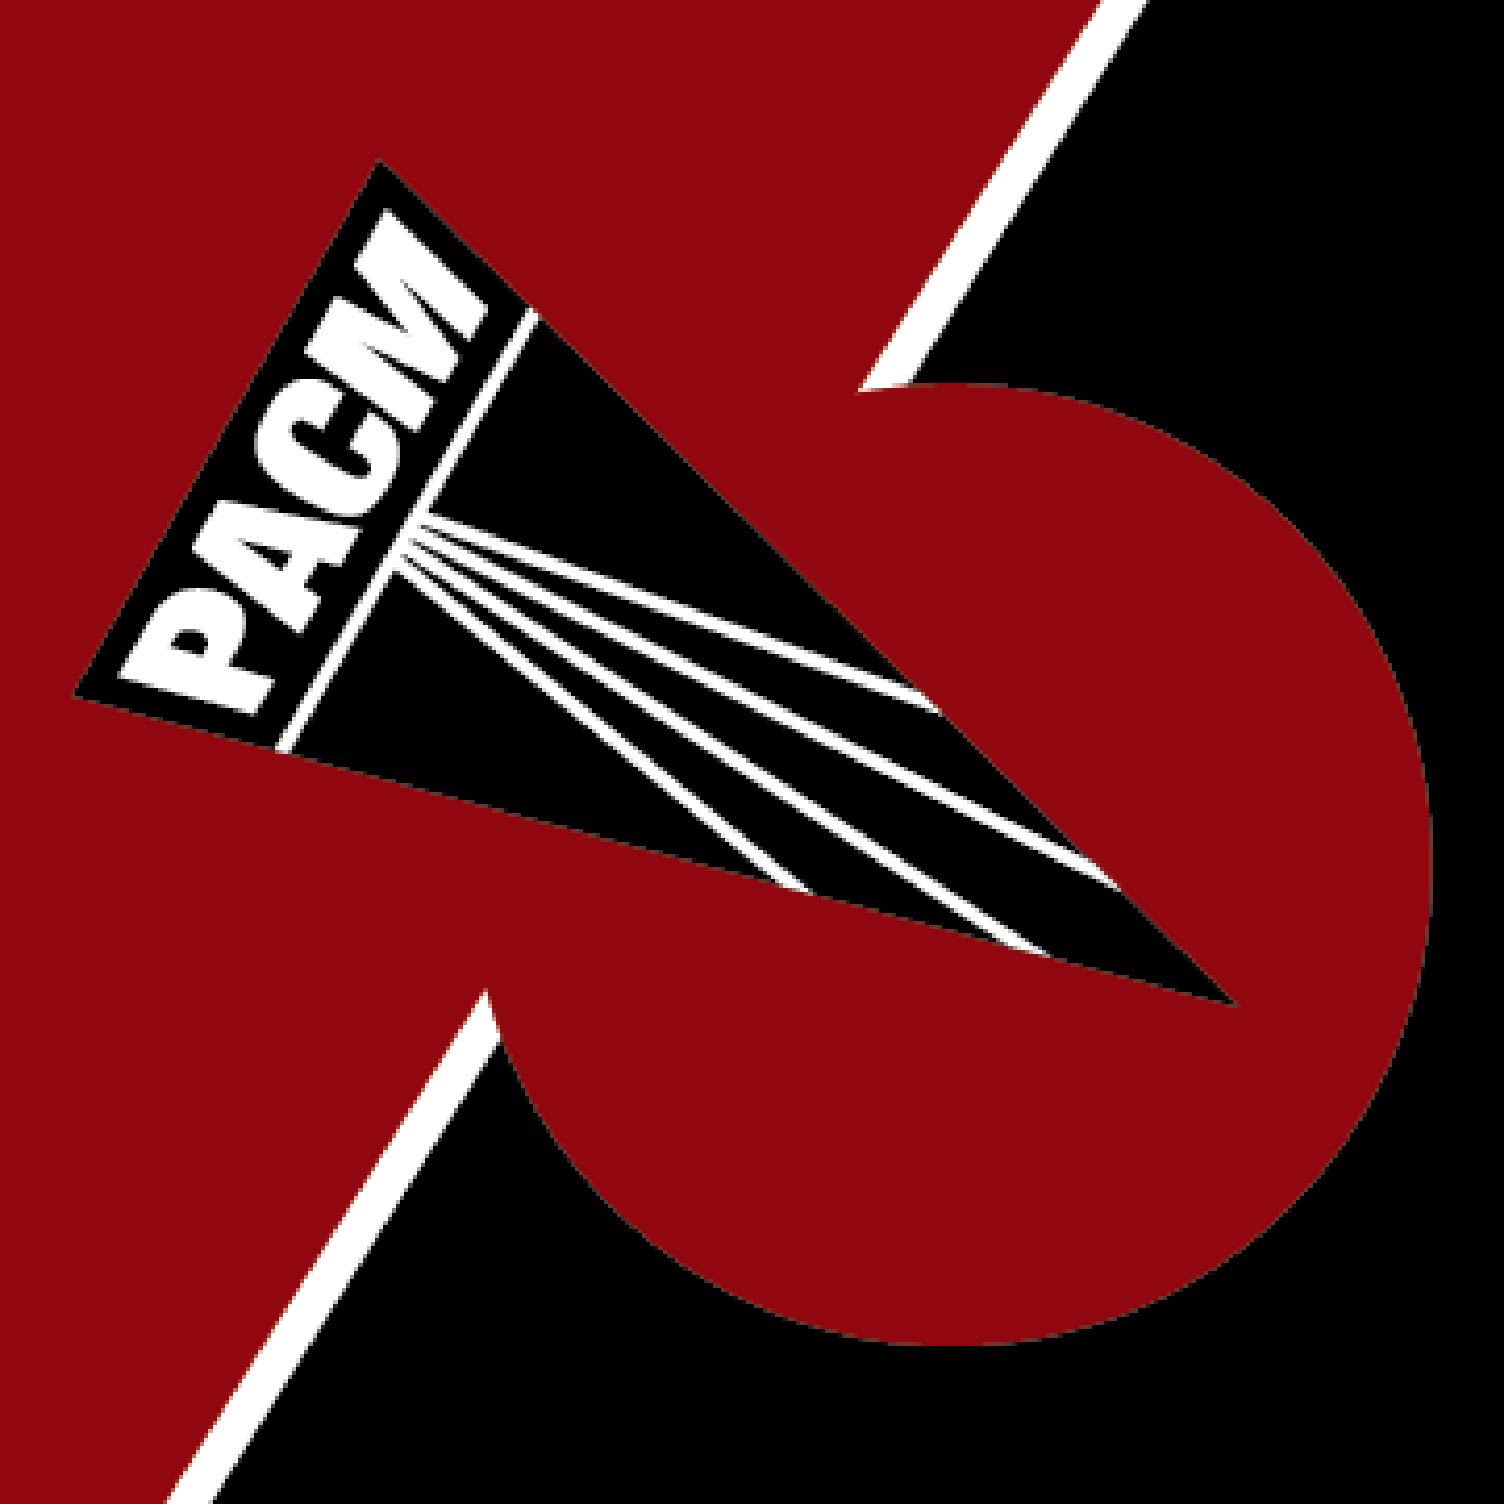 pacm.jpg logo